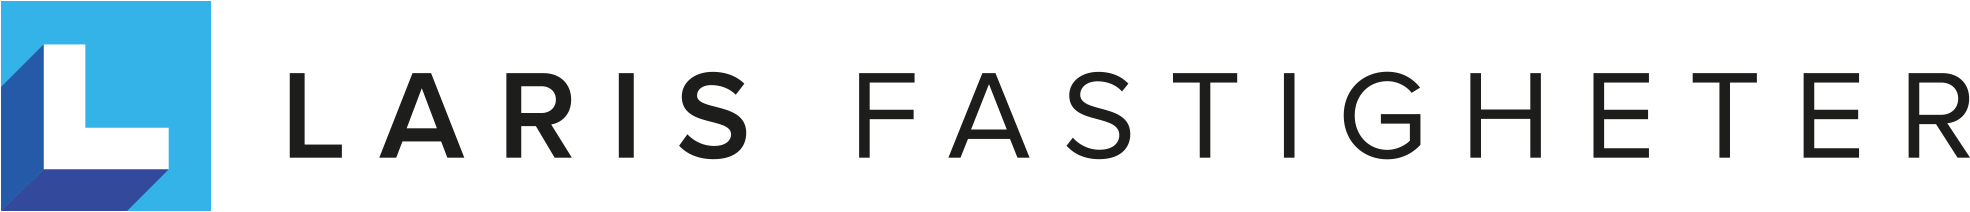 Laris Fastigheter logo